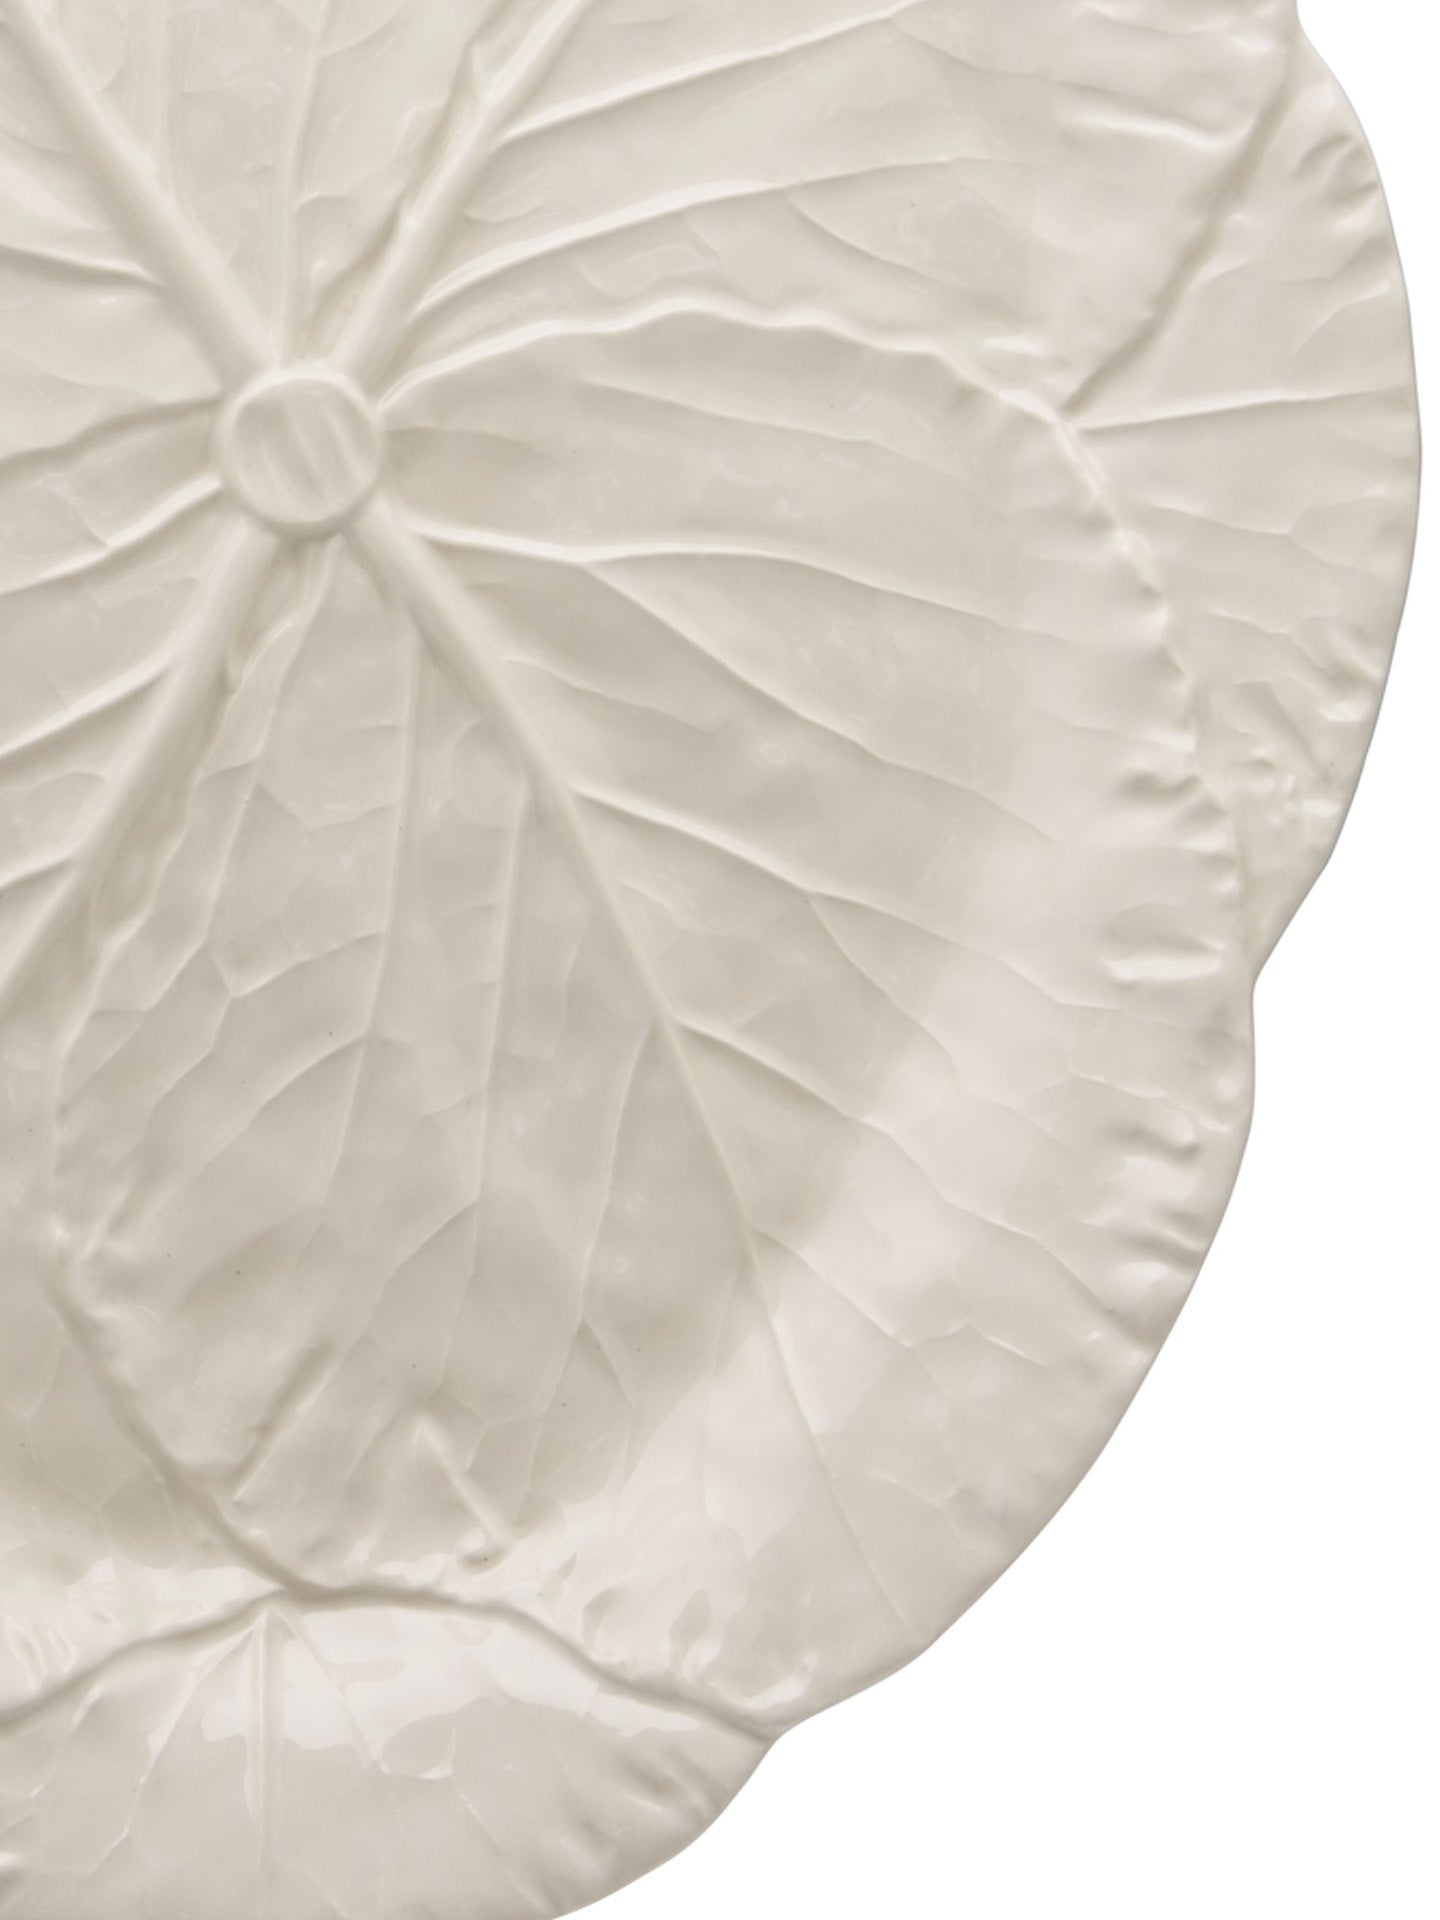 Large Oval Cabbage Platter, Ivory